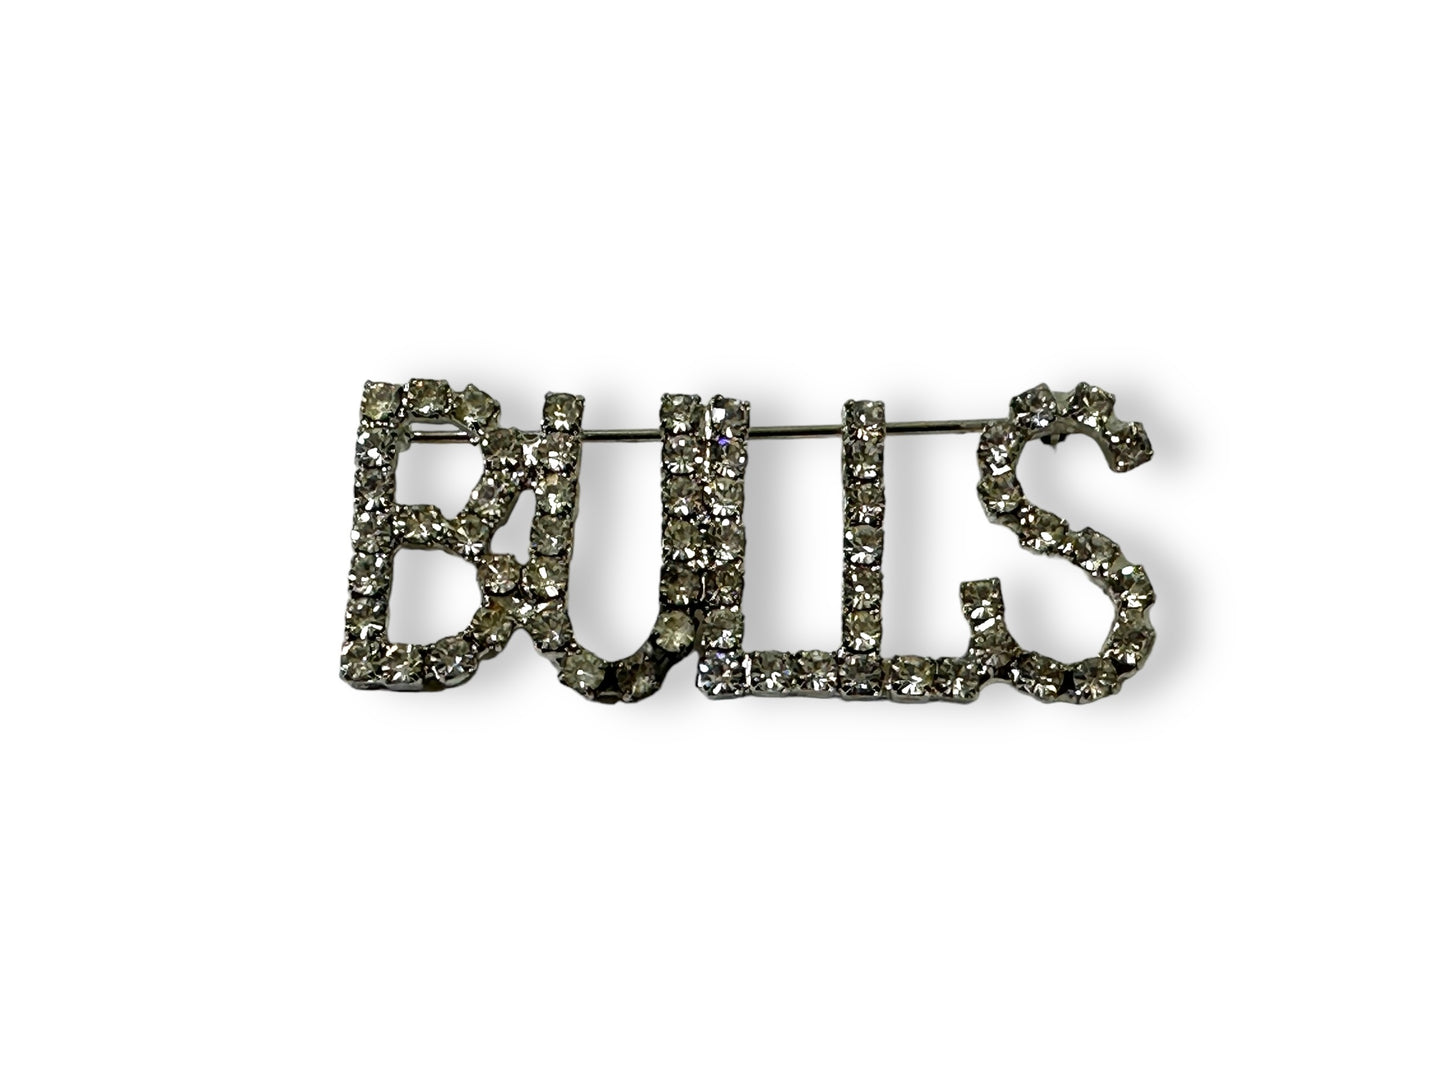 1990s “Bulls” Rhinestone Pin